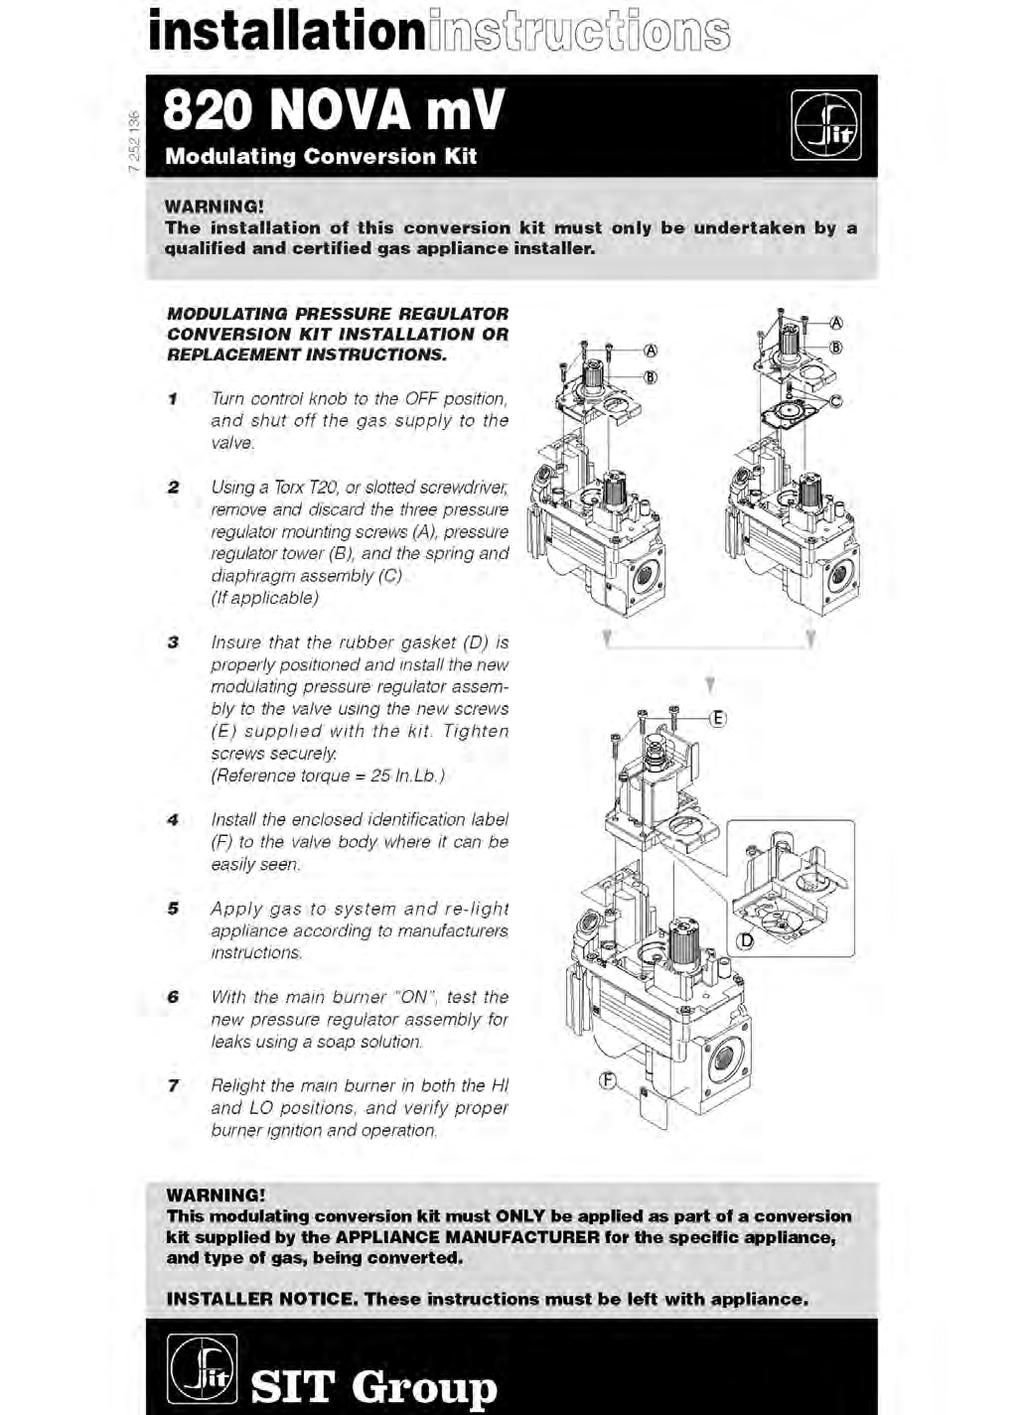 Gas Conversion for Modulator